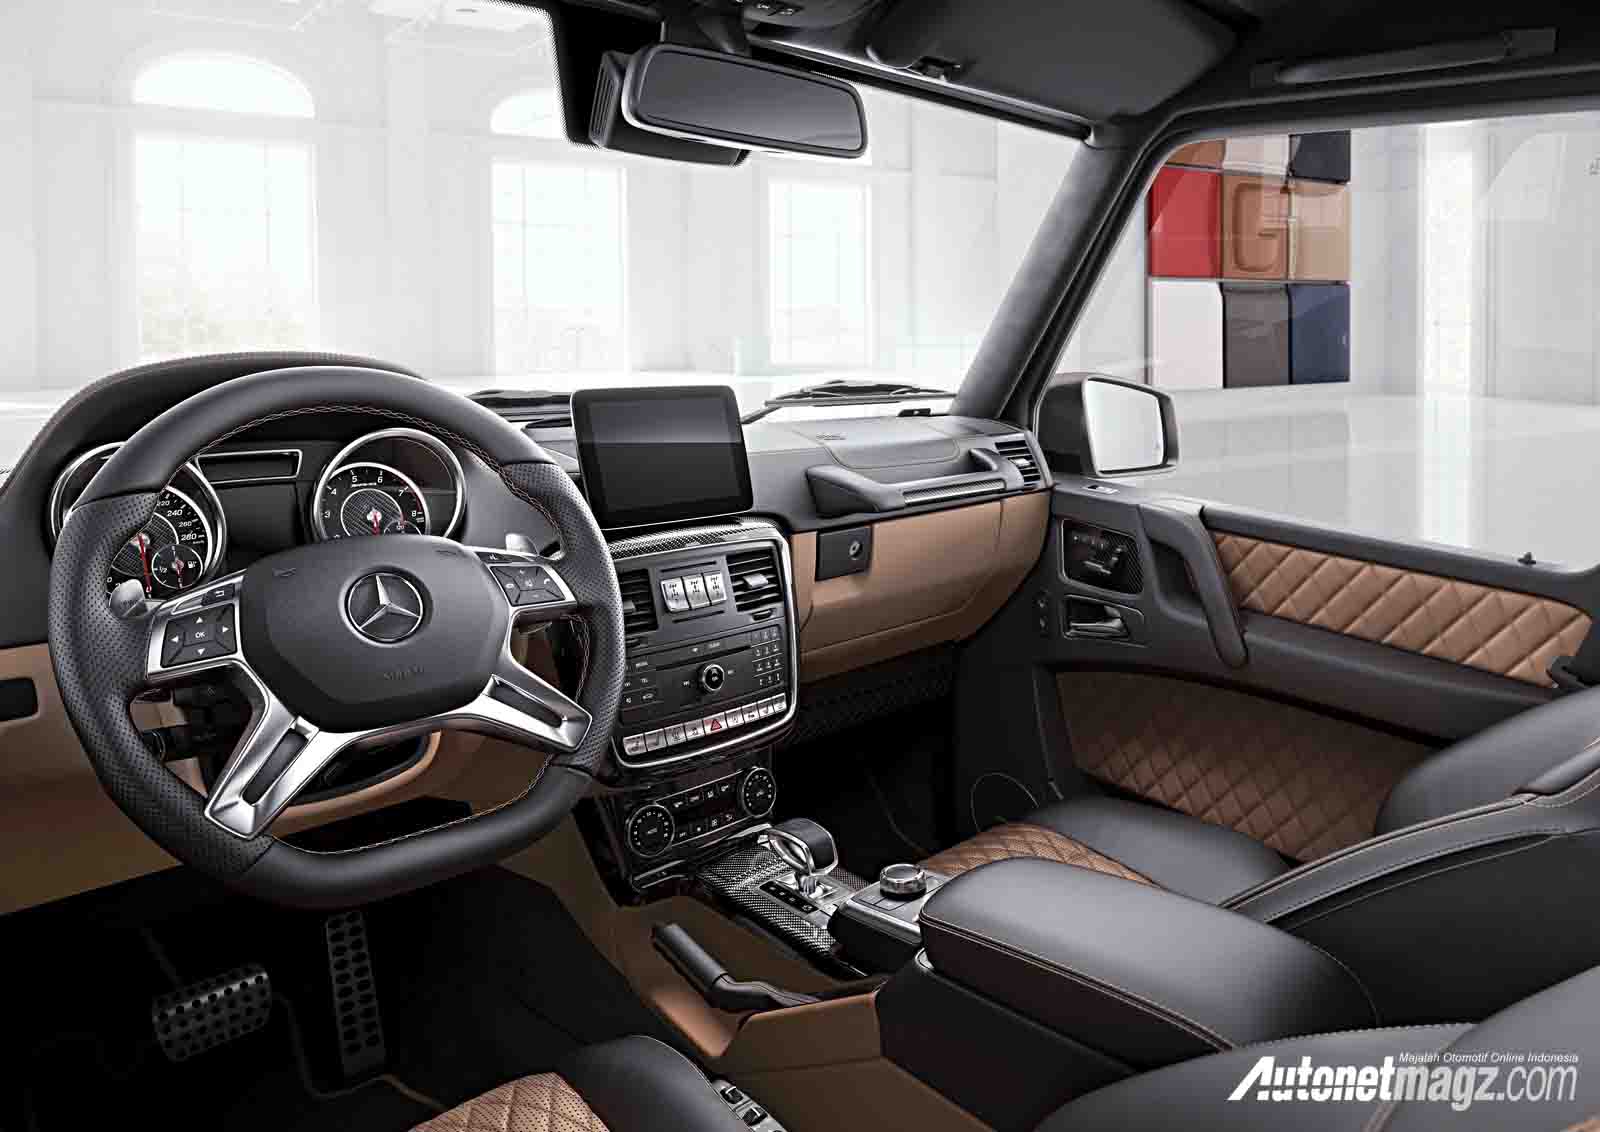 Berita, interior Mercedes-Benz G-Class exclusive edition: Mercedes-Benz Perkenalkan Dua Edisi Spesial dari G-Class